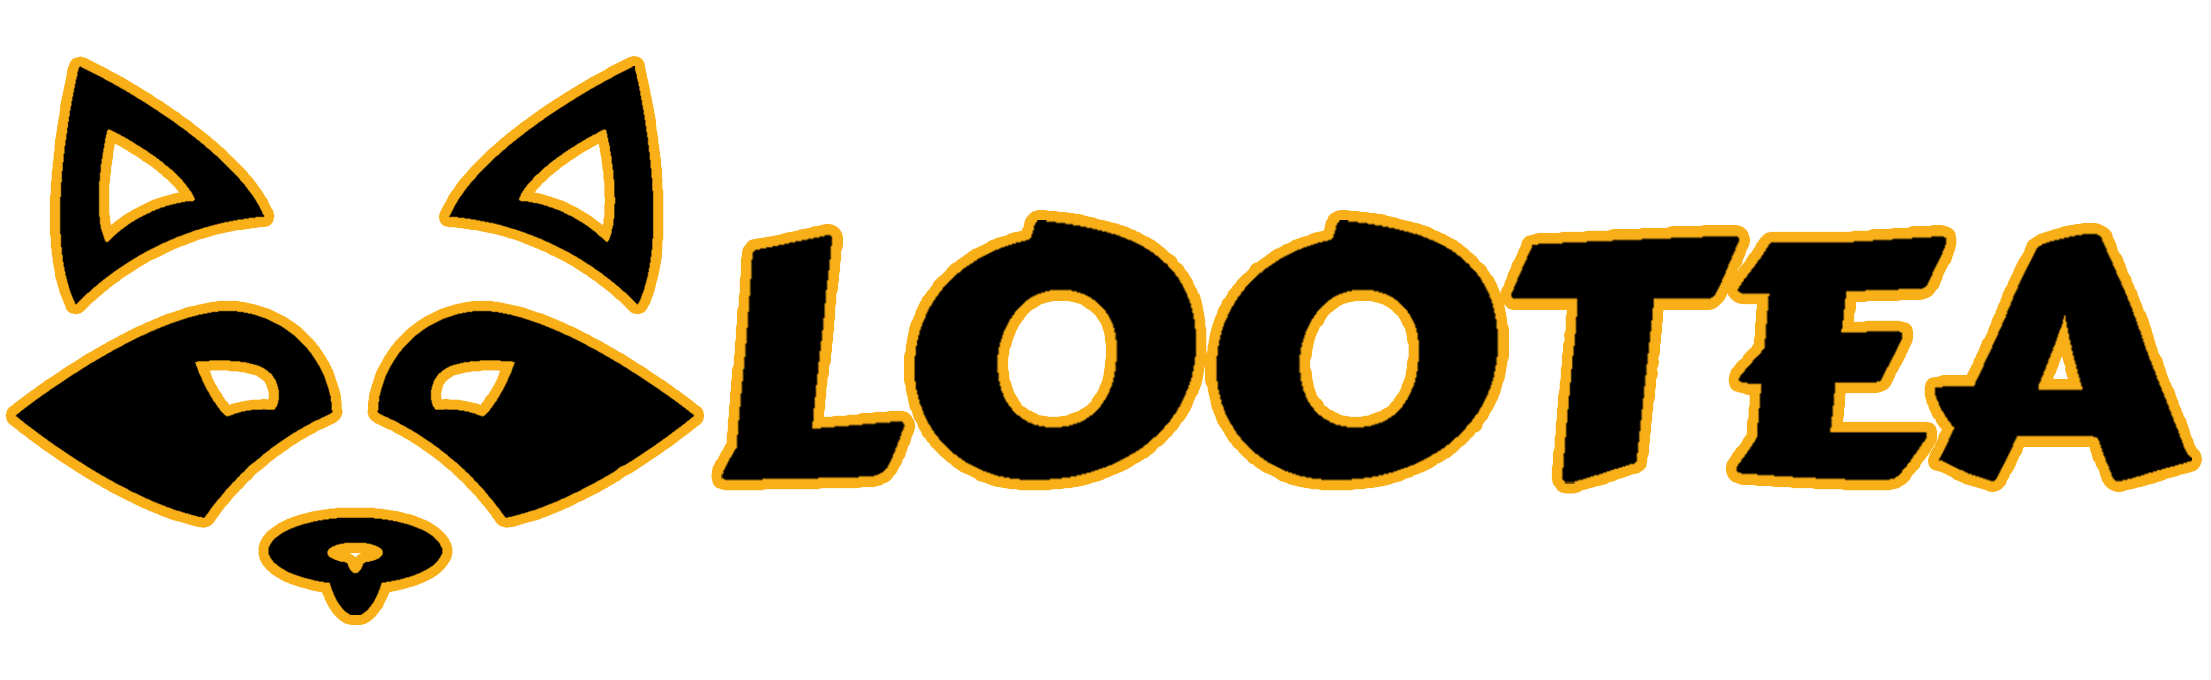 Lootea logo